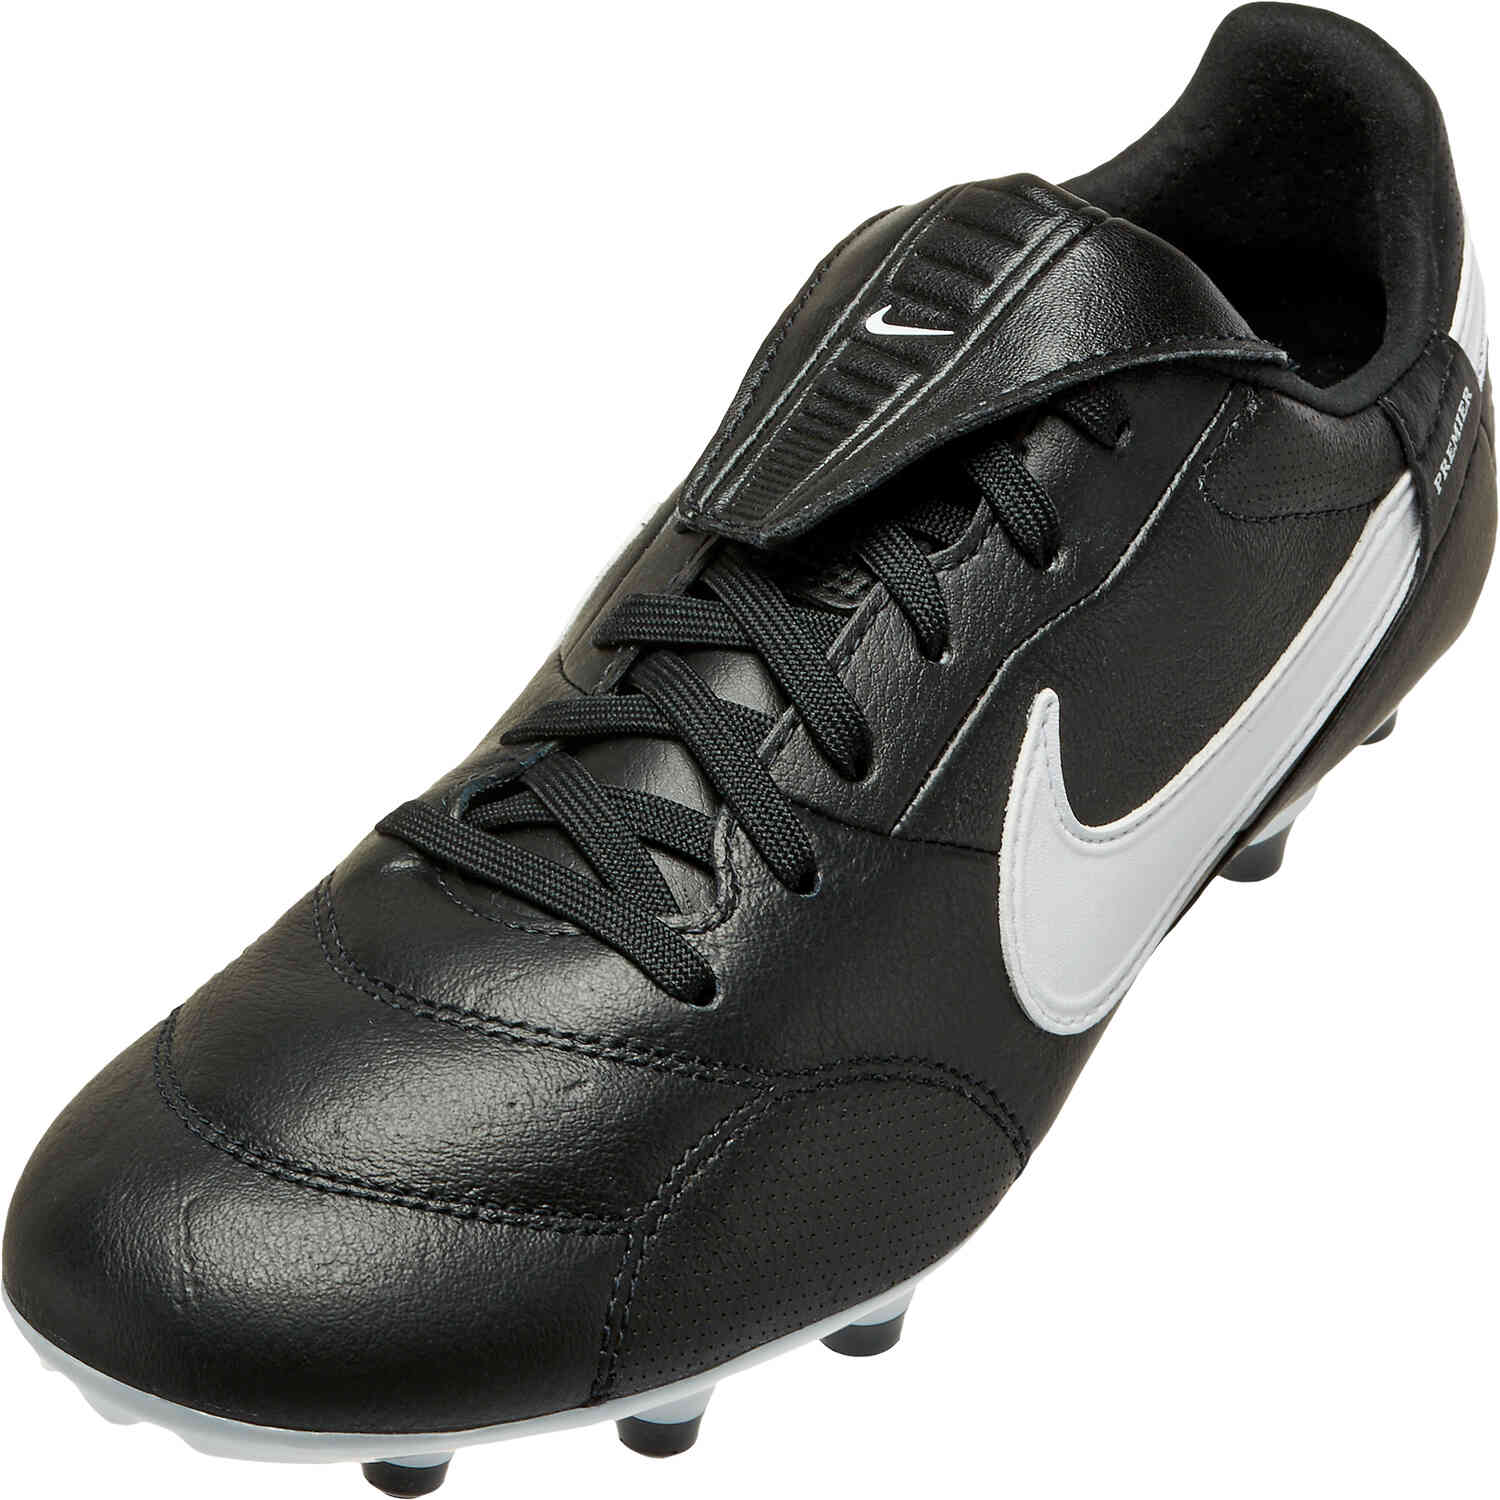 Nike Premier III FG - Black & White - SoccerPro